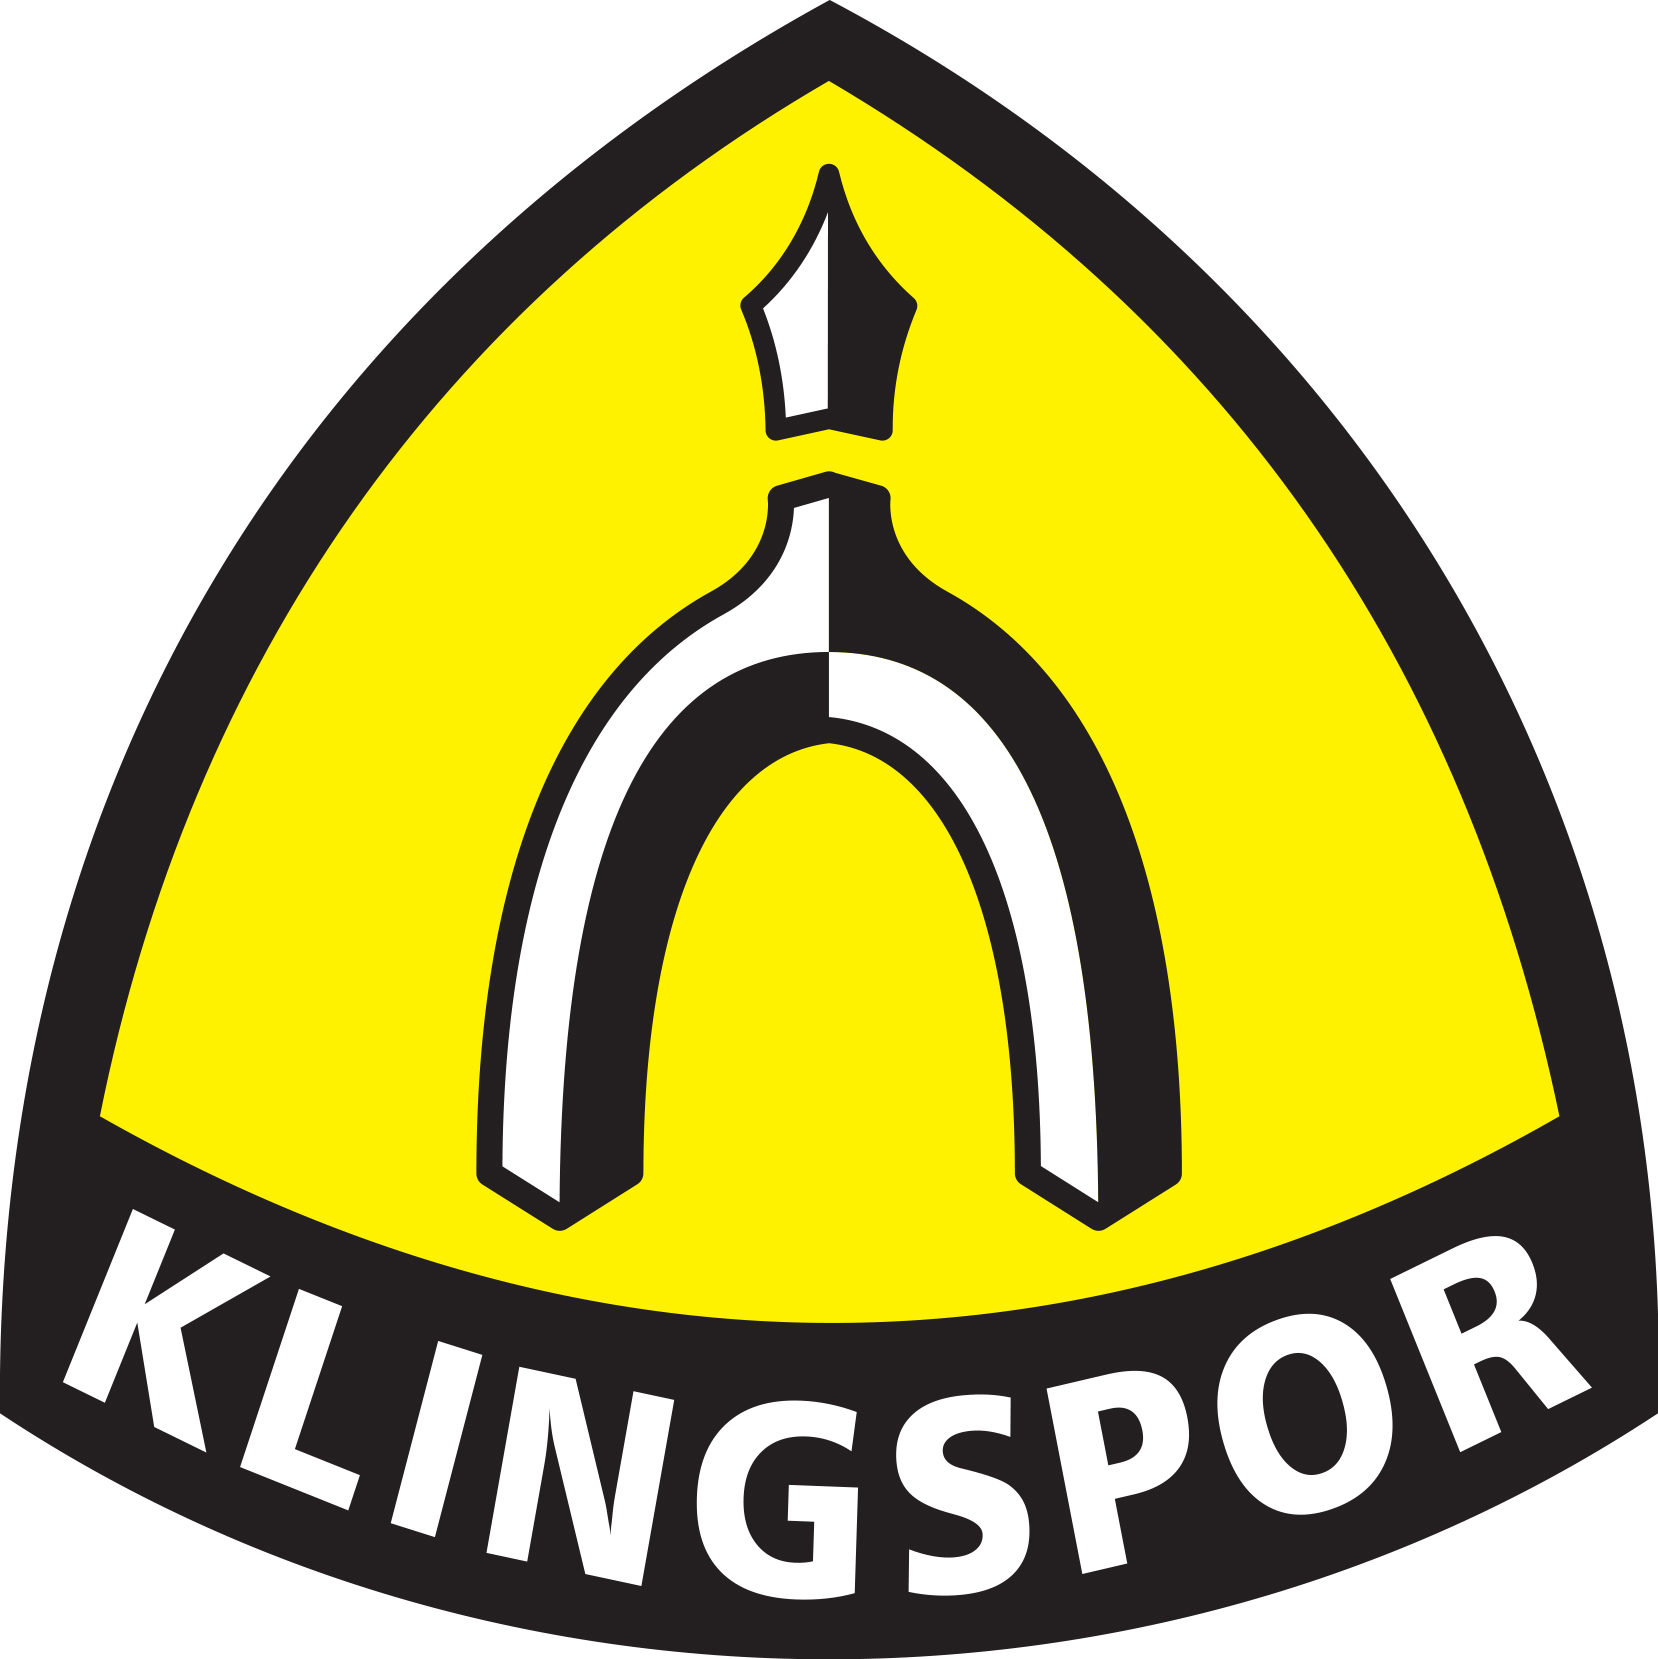 KLINGSPOR INC in 